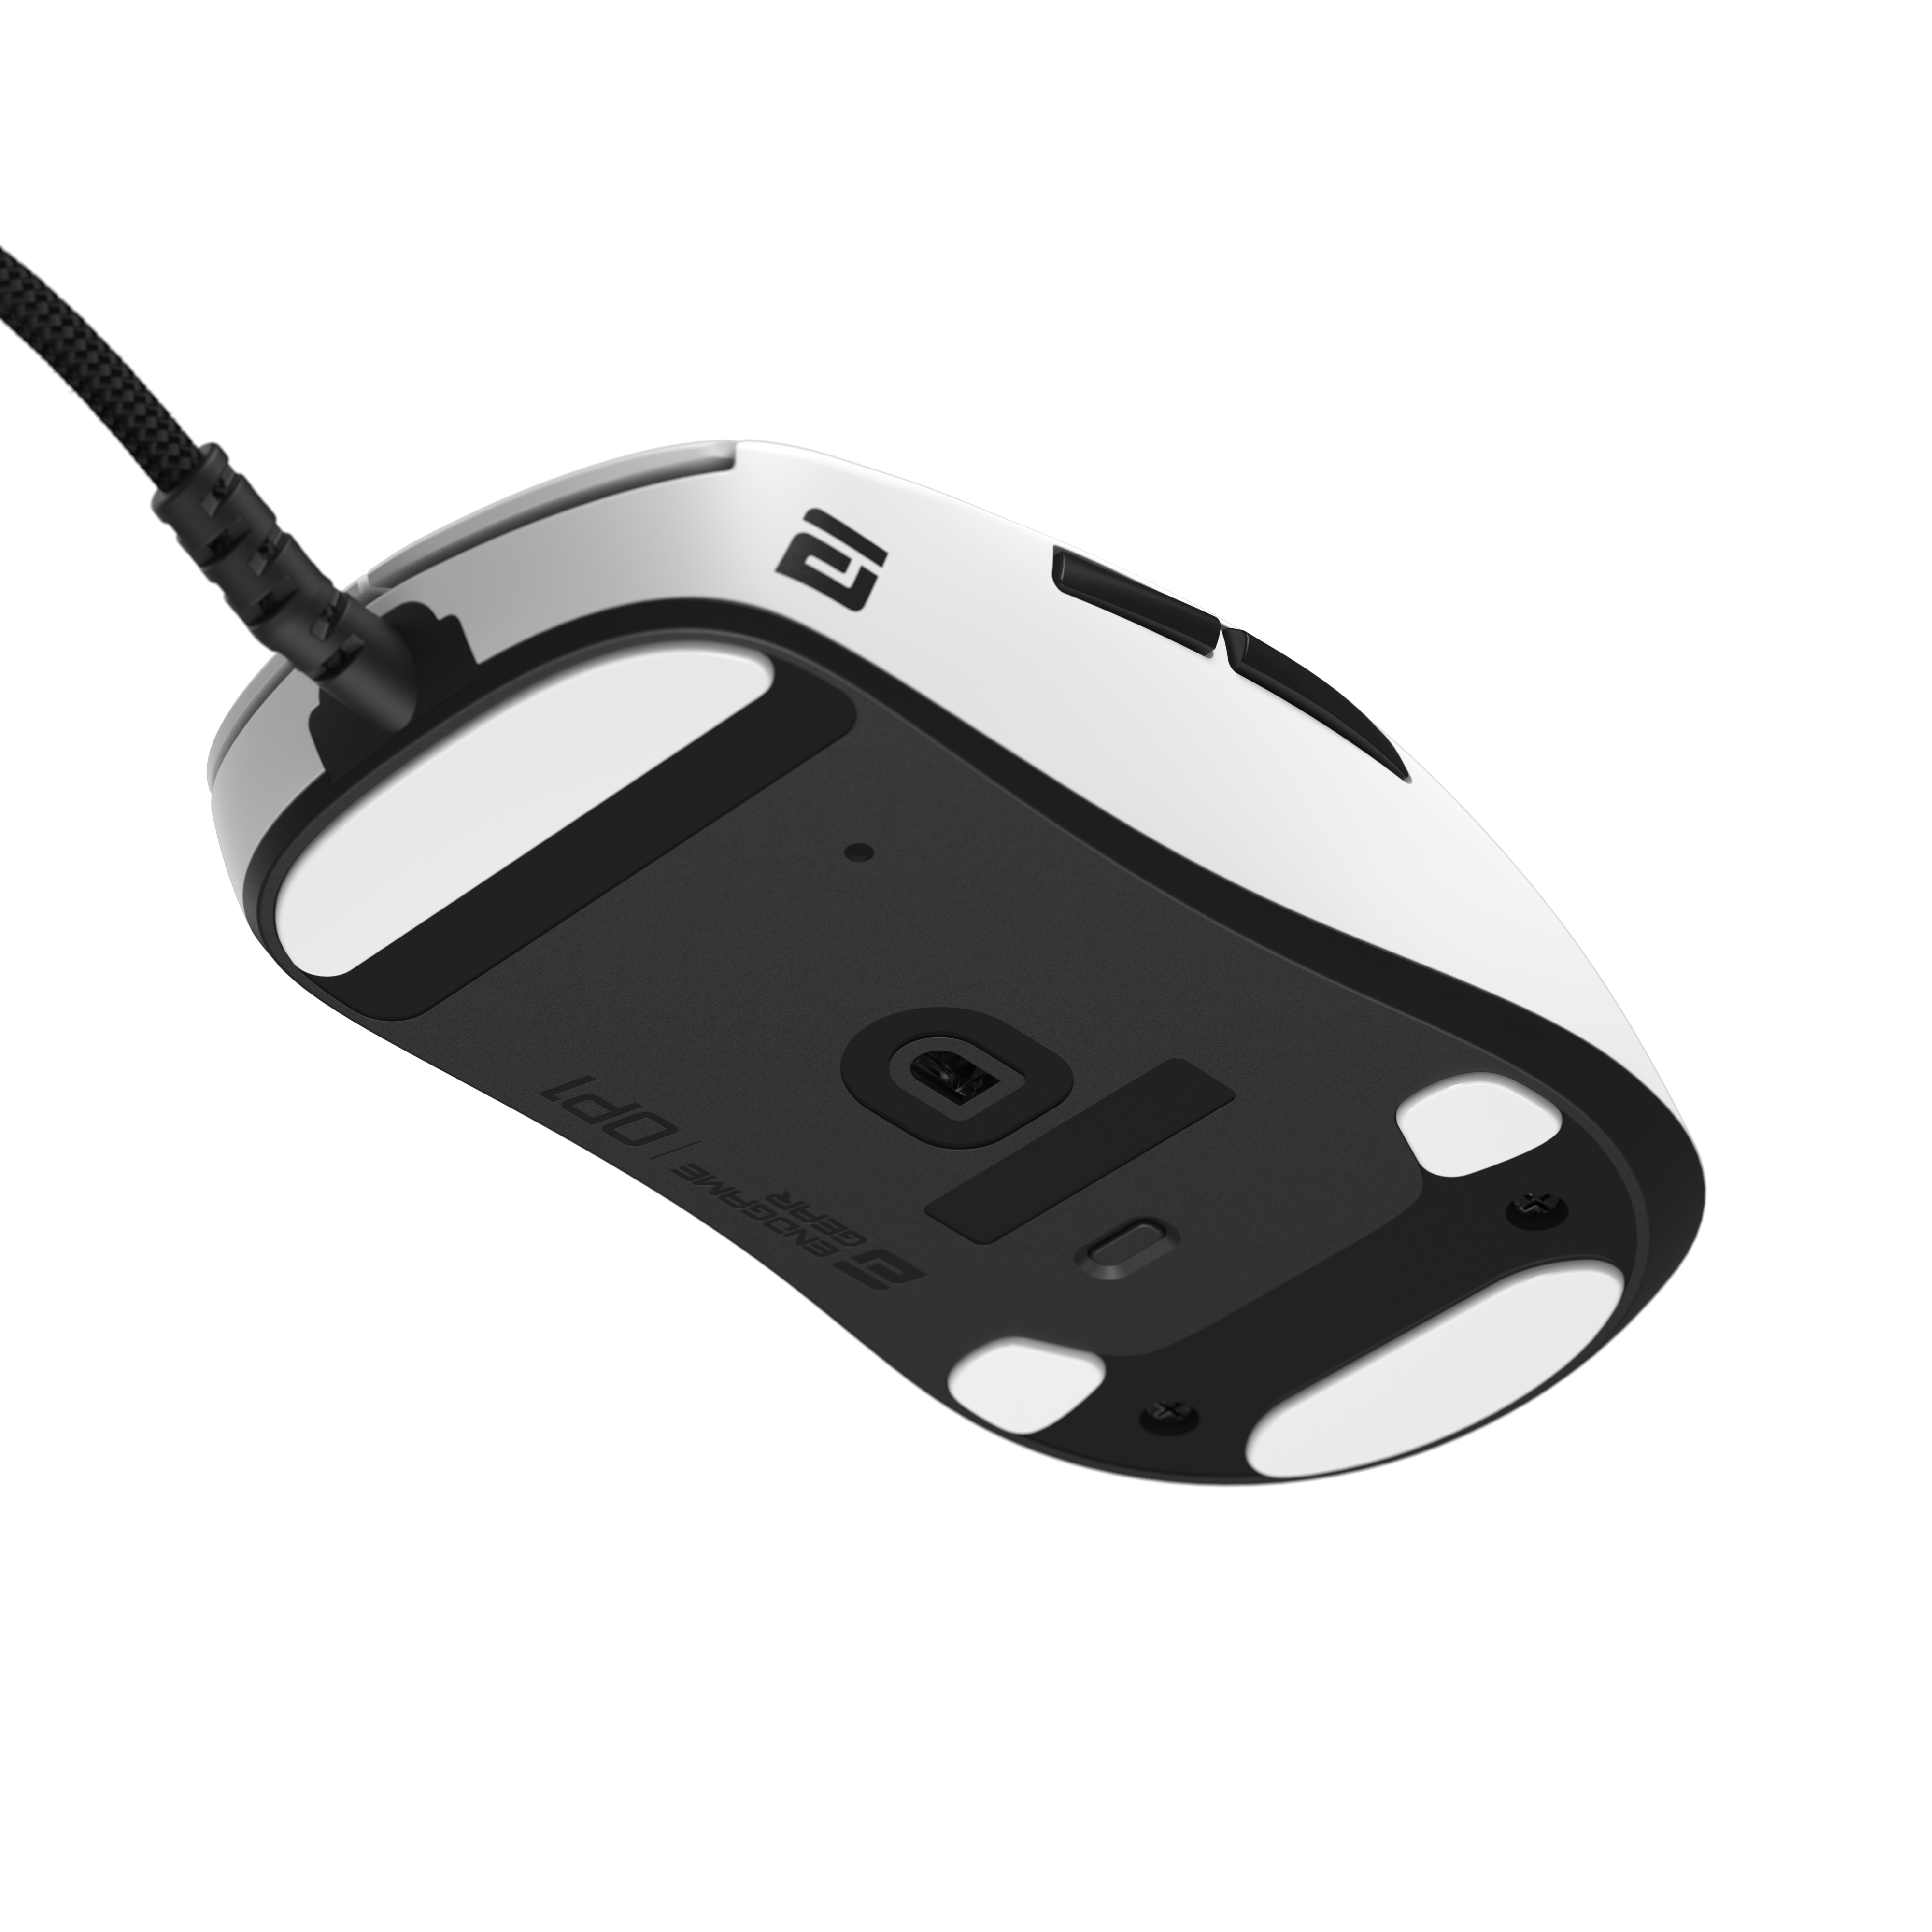 Endgame Gear - Endgame Gear OP1 USB Optical Gaming Mouse - White